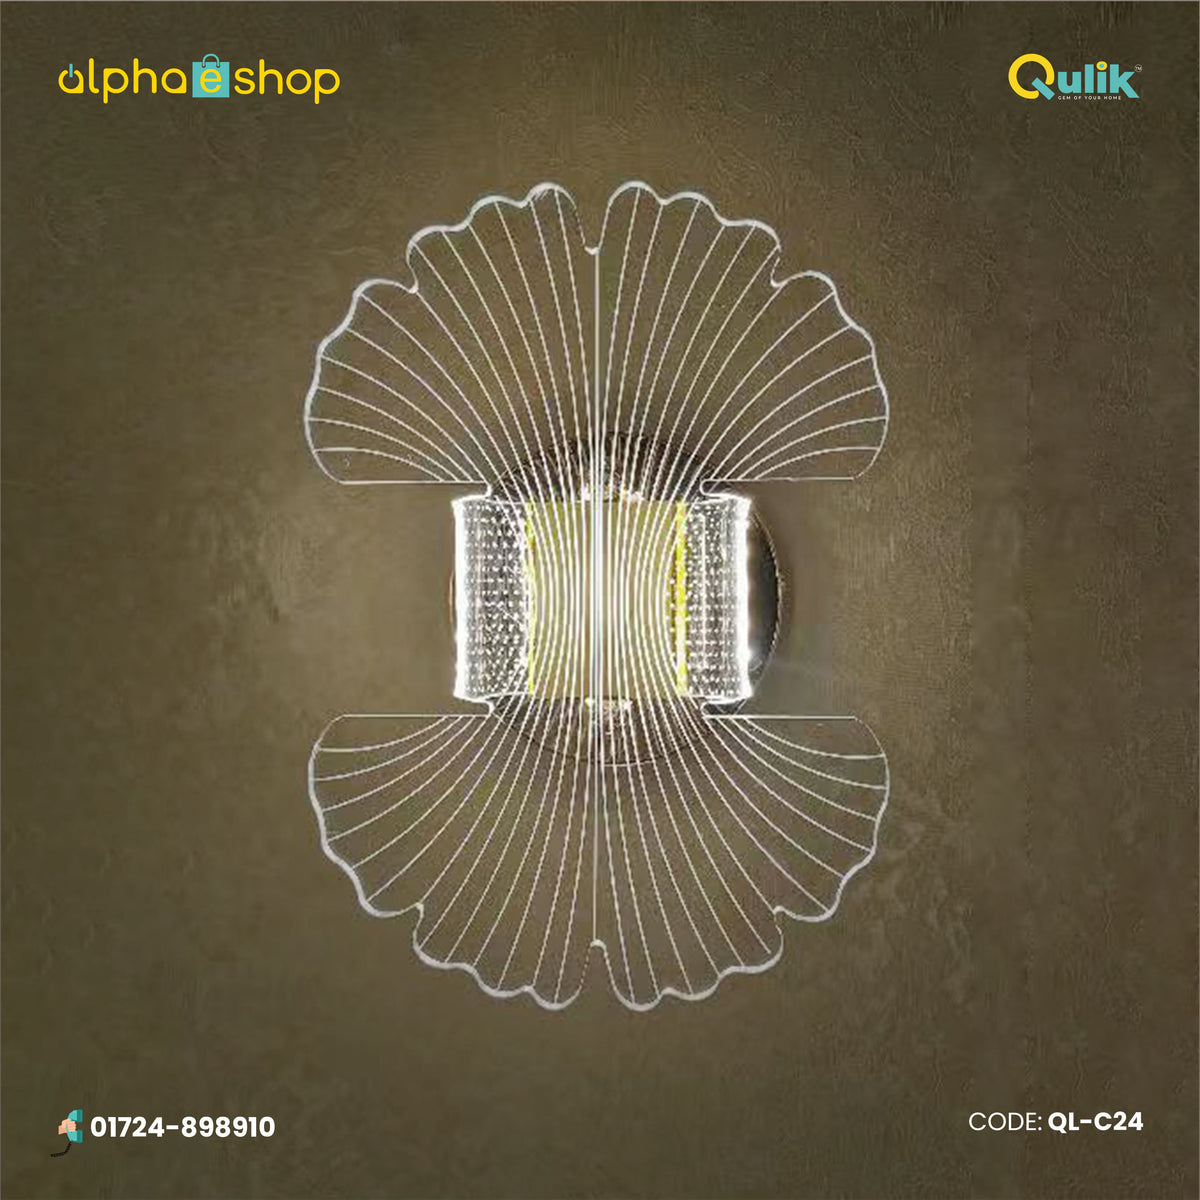 Qulik C24 LED Wall Lamp - Timeless Elegance, Versatile Illumination, 2-Year Warranty. Illuminate your space with confidence and sophistication.